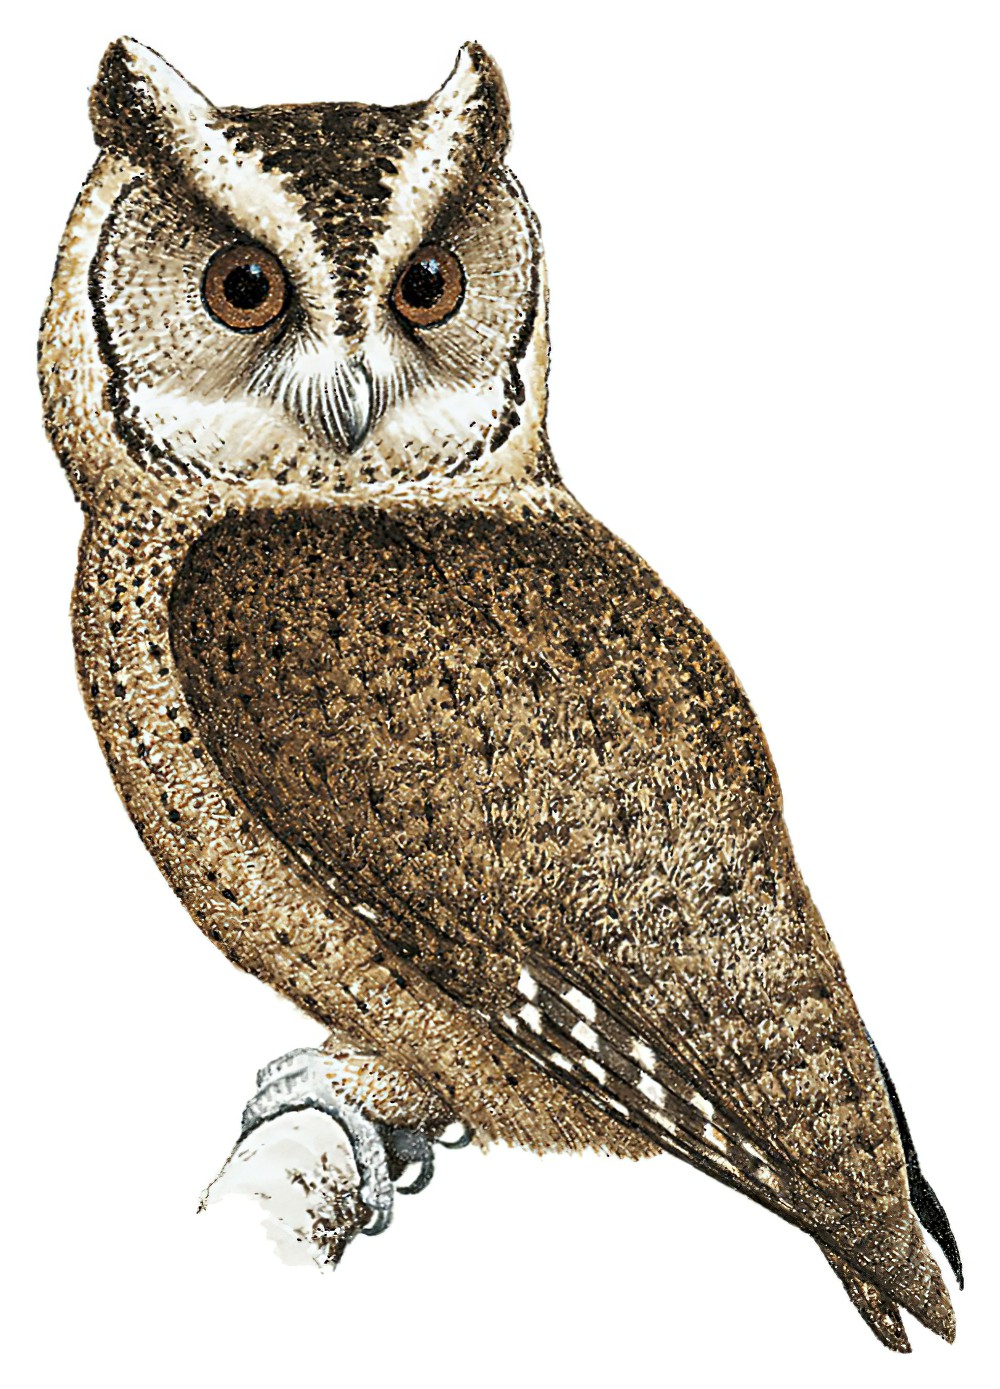 Everett\'s Scops-Owl / Otus everetti